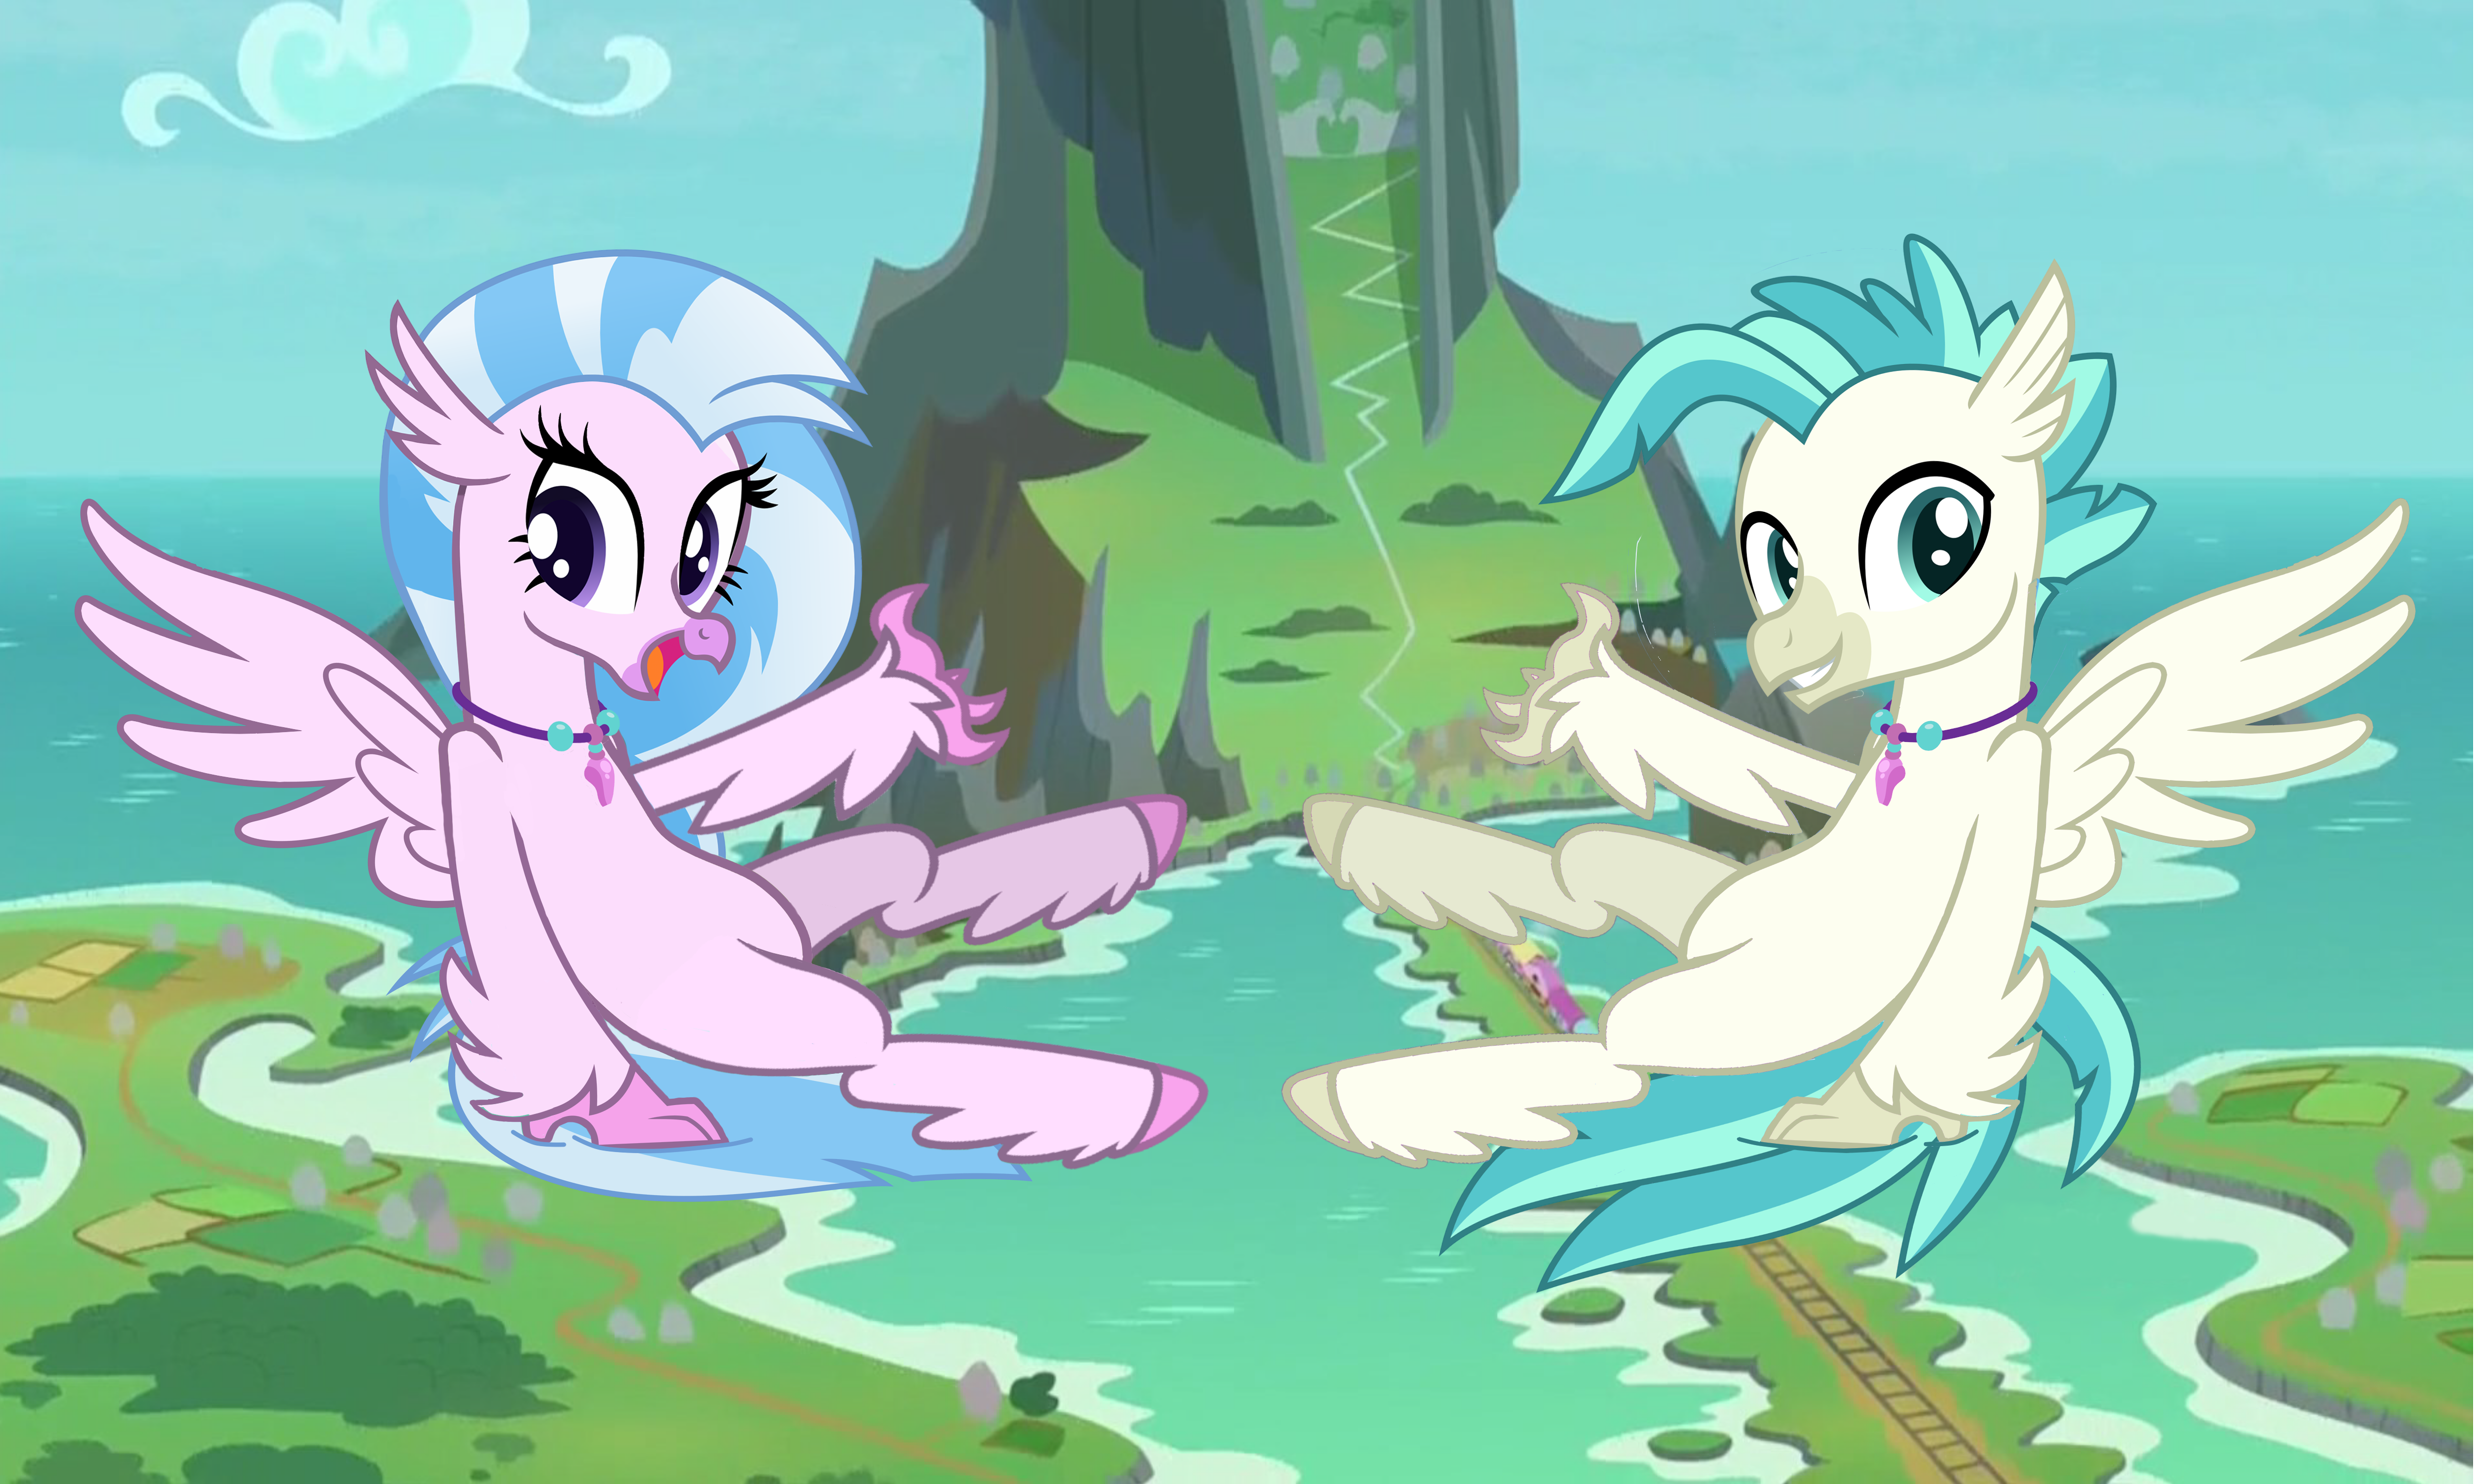 Silverstream's plan, My Little Pony: Friendship is Magic